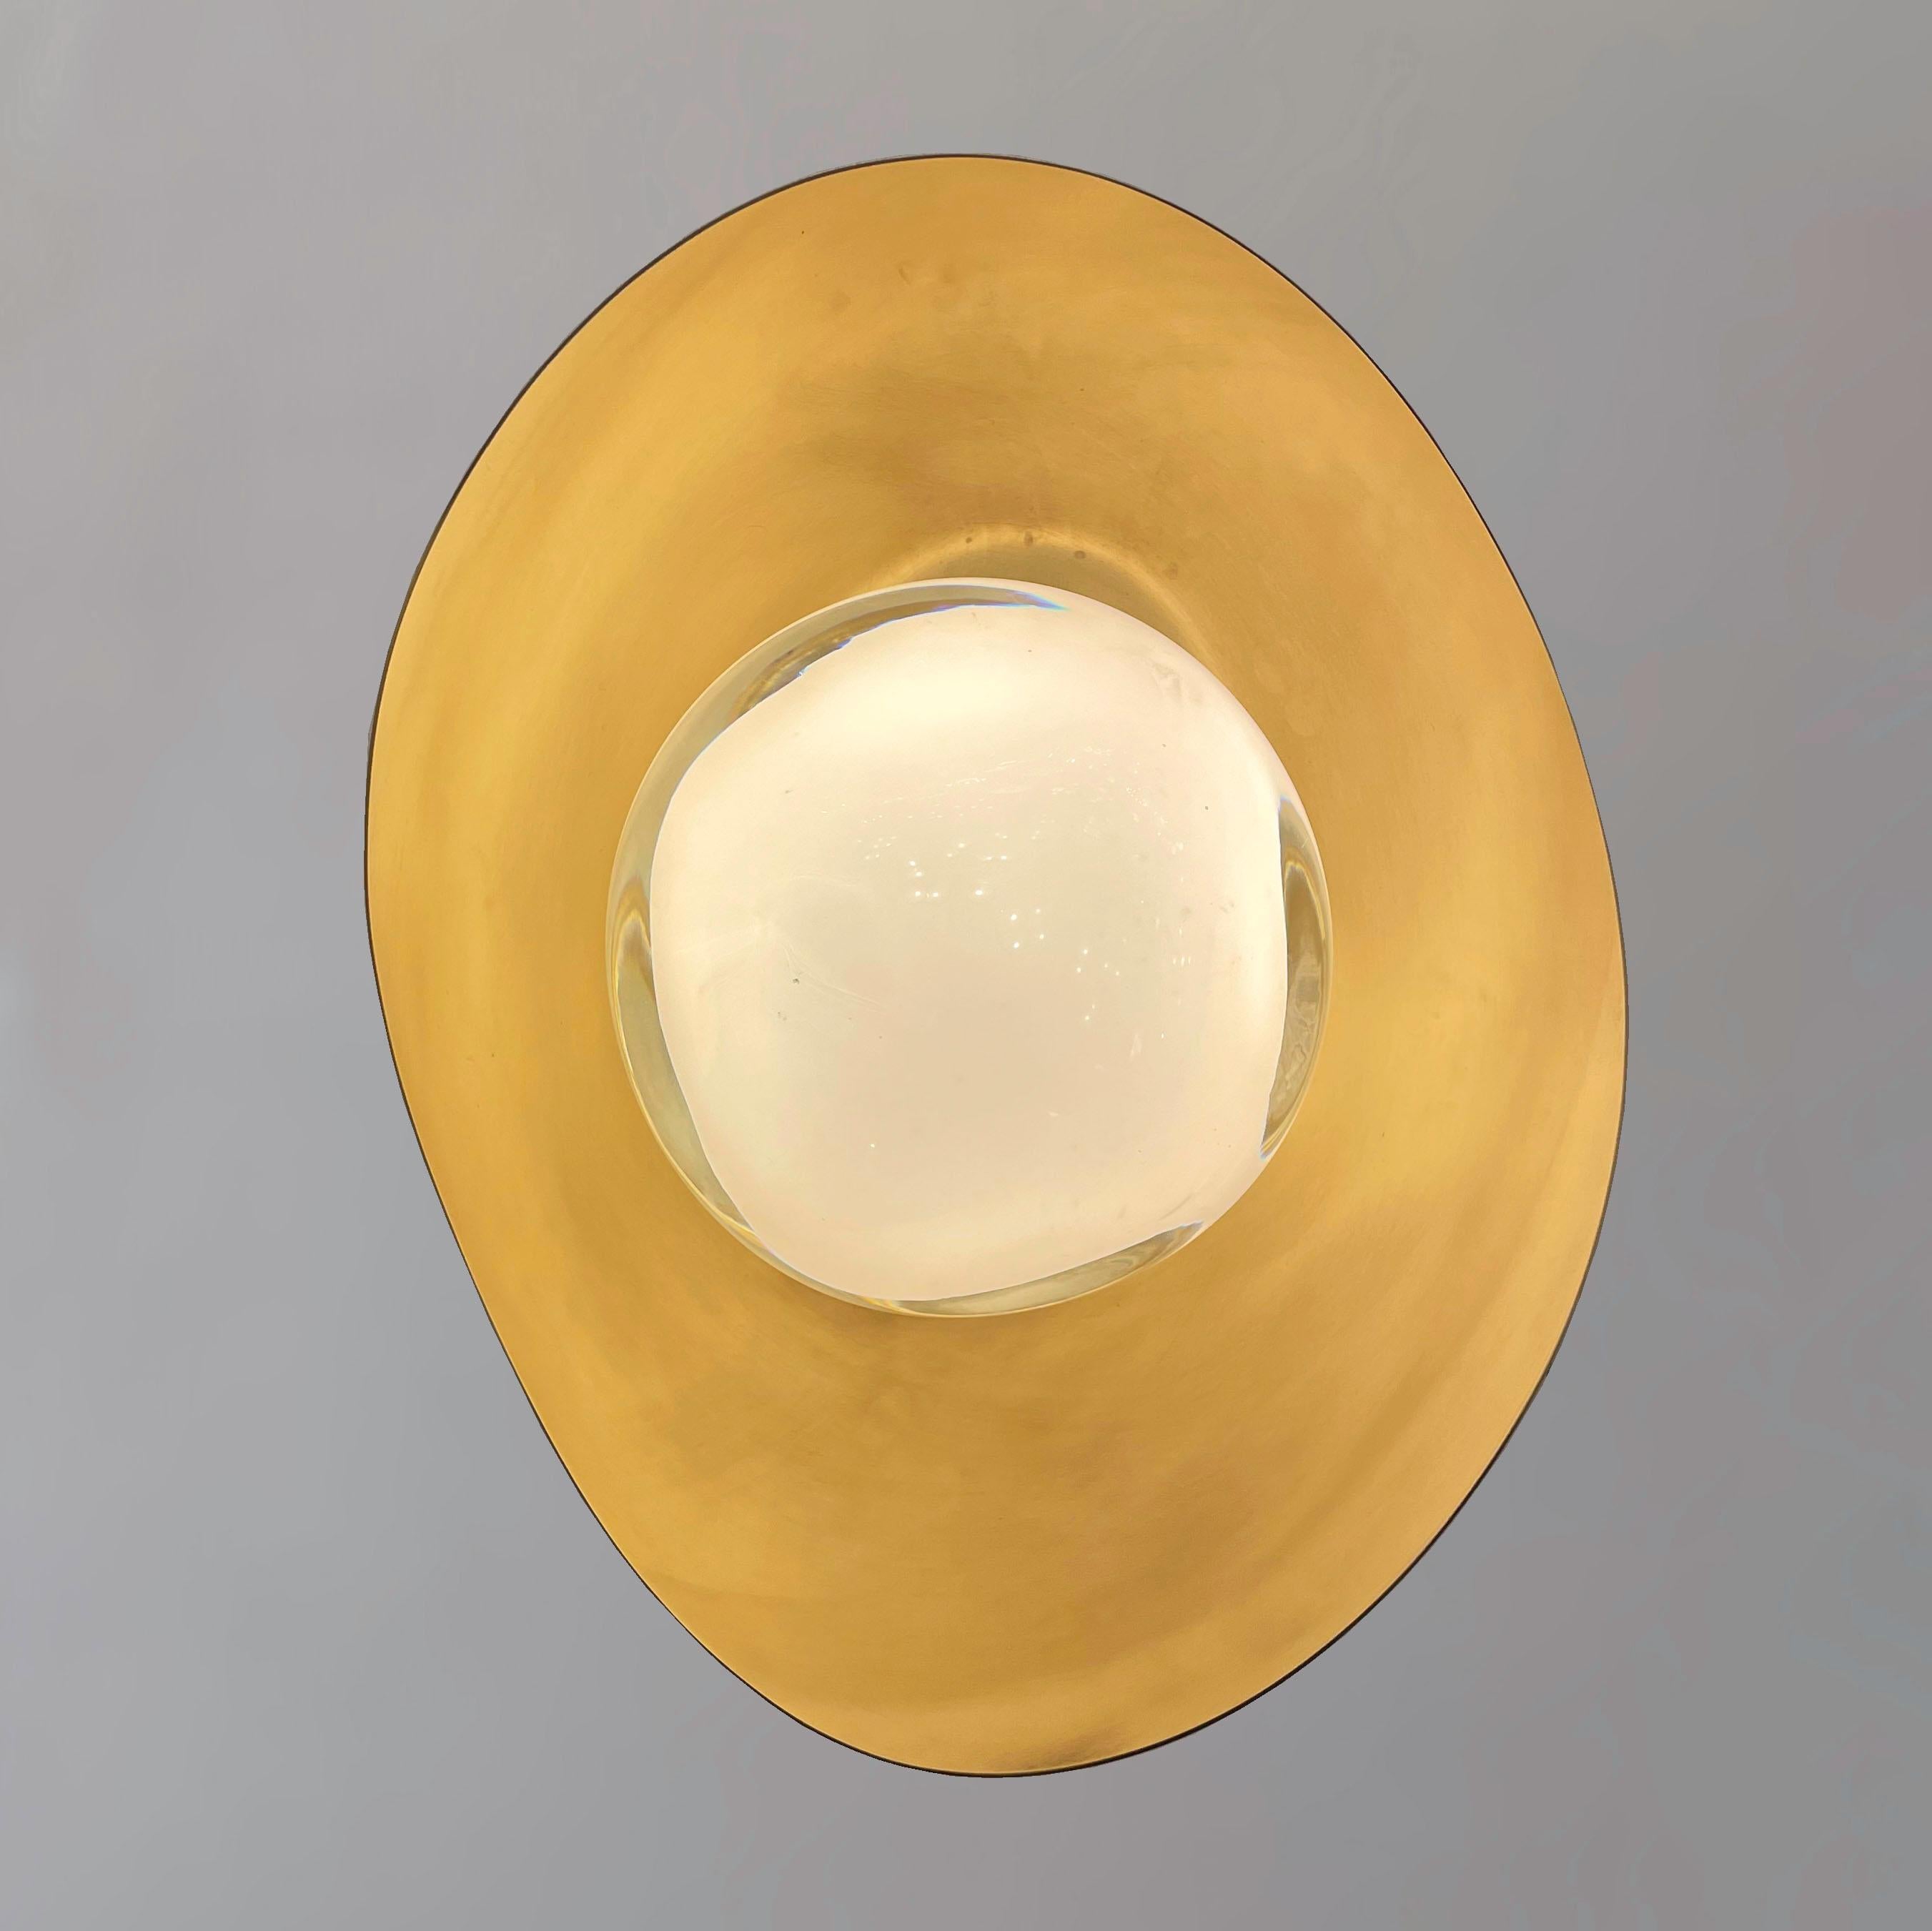 Italian Perla Flushmount Ceiling Light by Gaspare Asaro-Satin Brass/Bronze Finish. For Sale